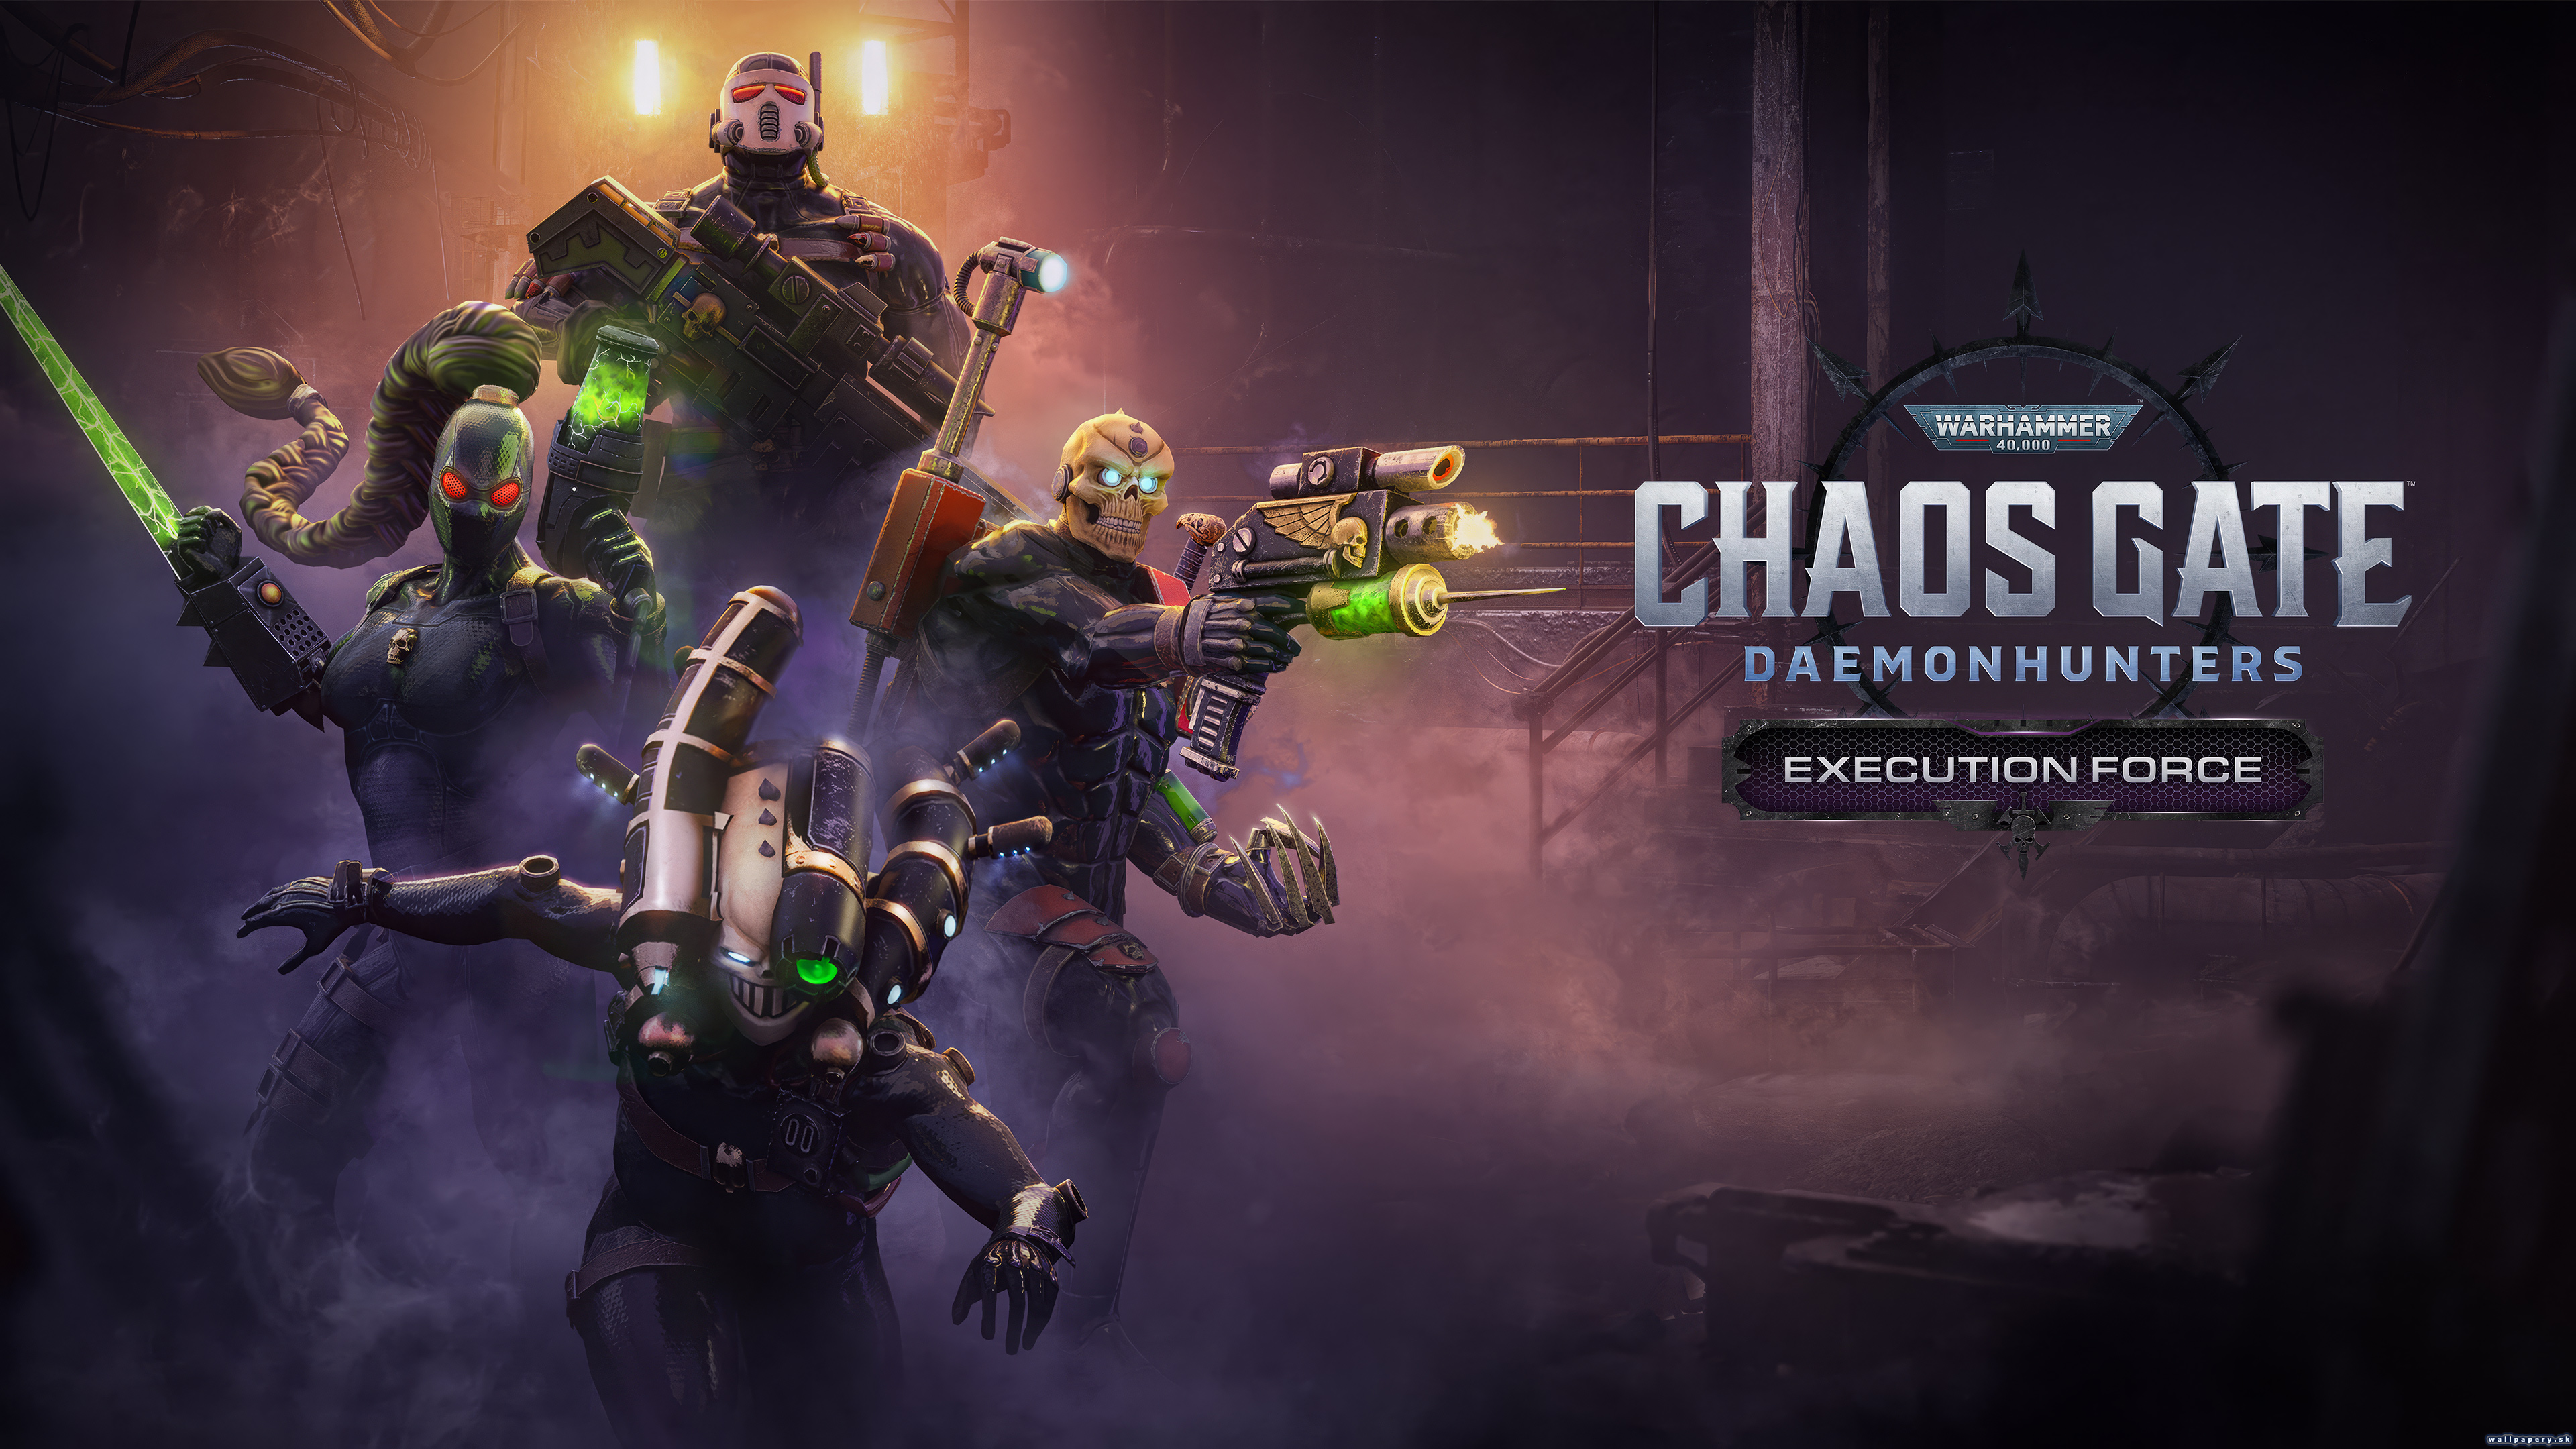 Warhammer 40,000: Chaos Gate - Daemonhunters - Execution Force - wallpaper 1